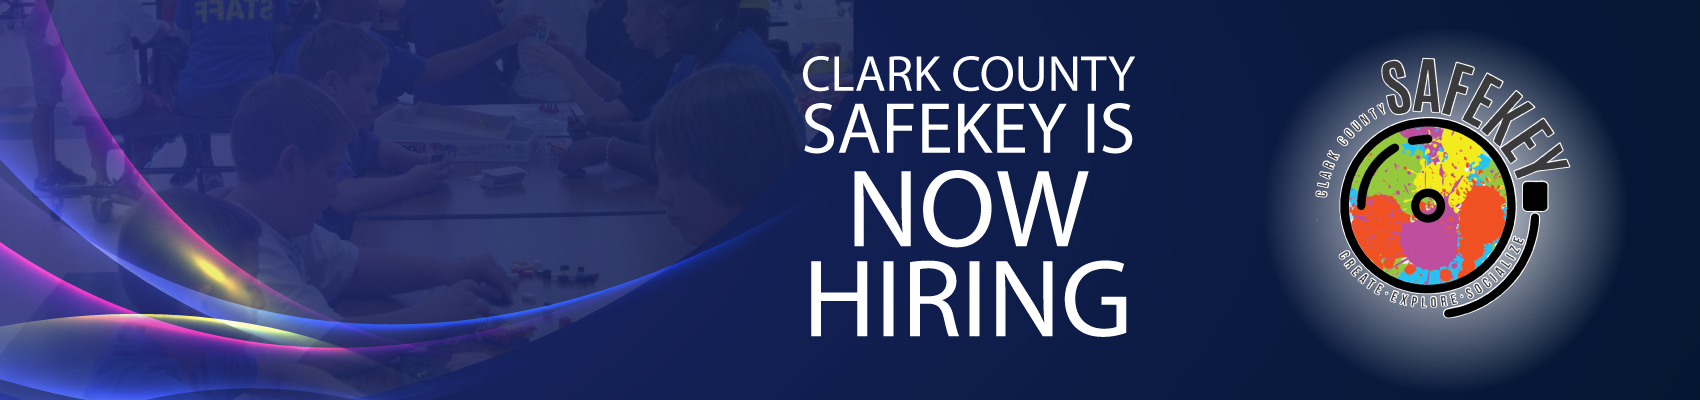 ccpr-banner-safekey-hiring